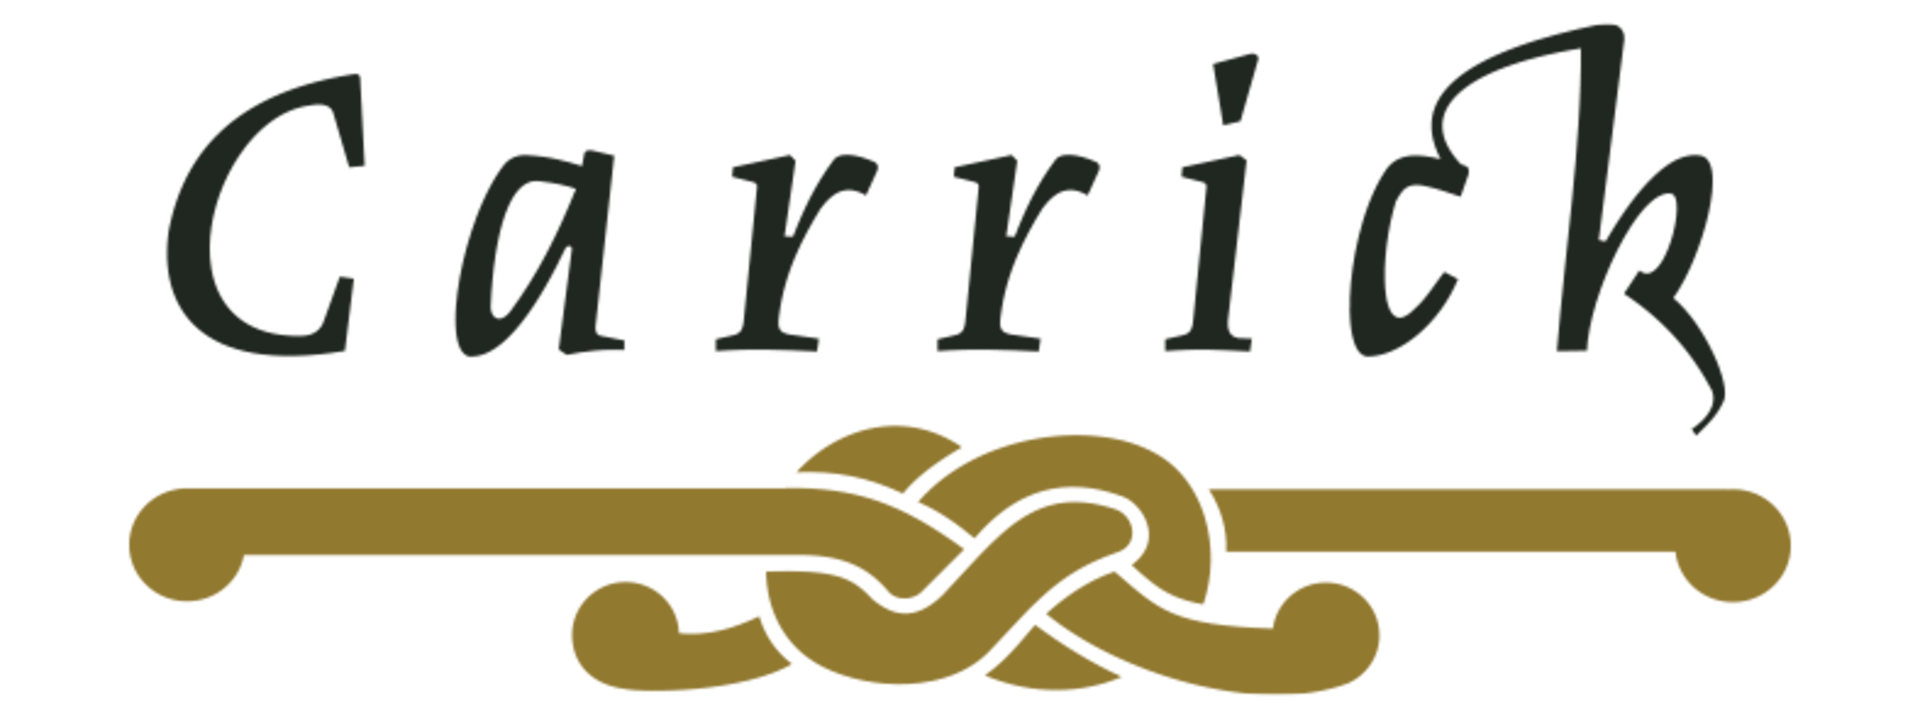 carrick-logo-rgb.png